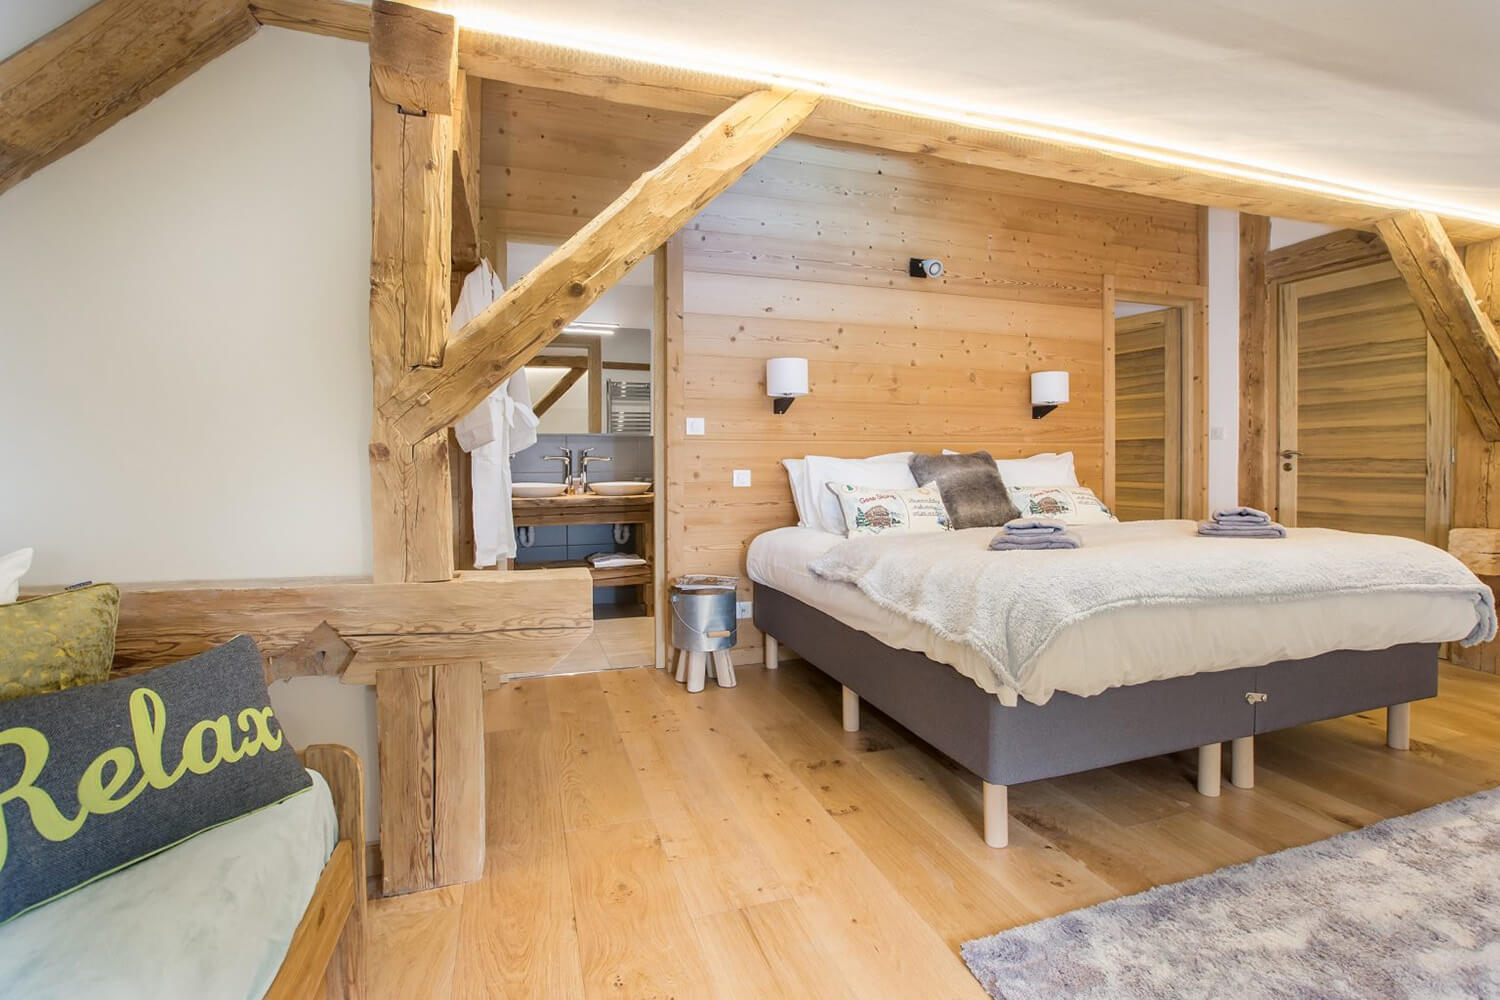 Retreat accommodation in the French Alps near Geneva